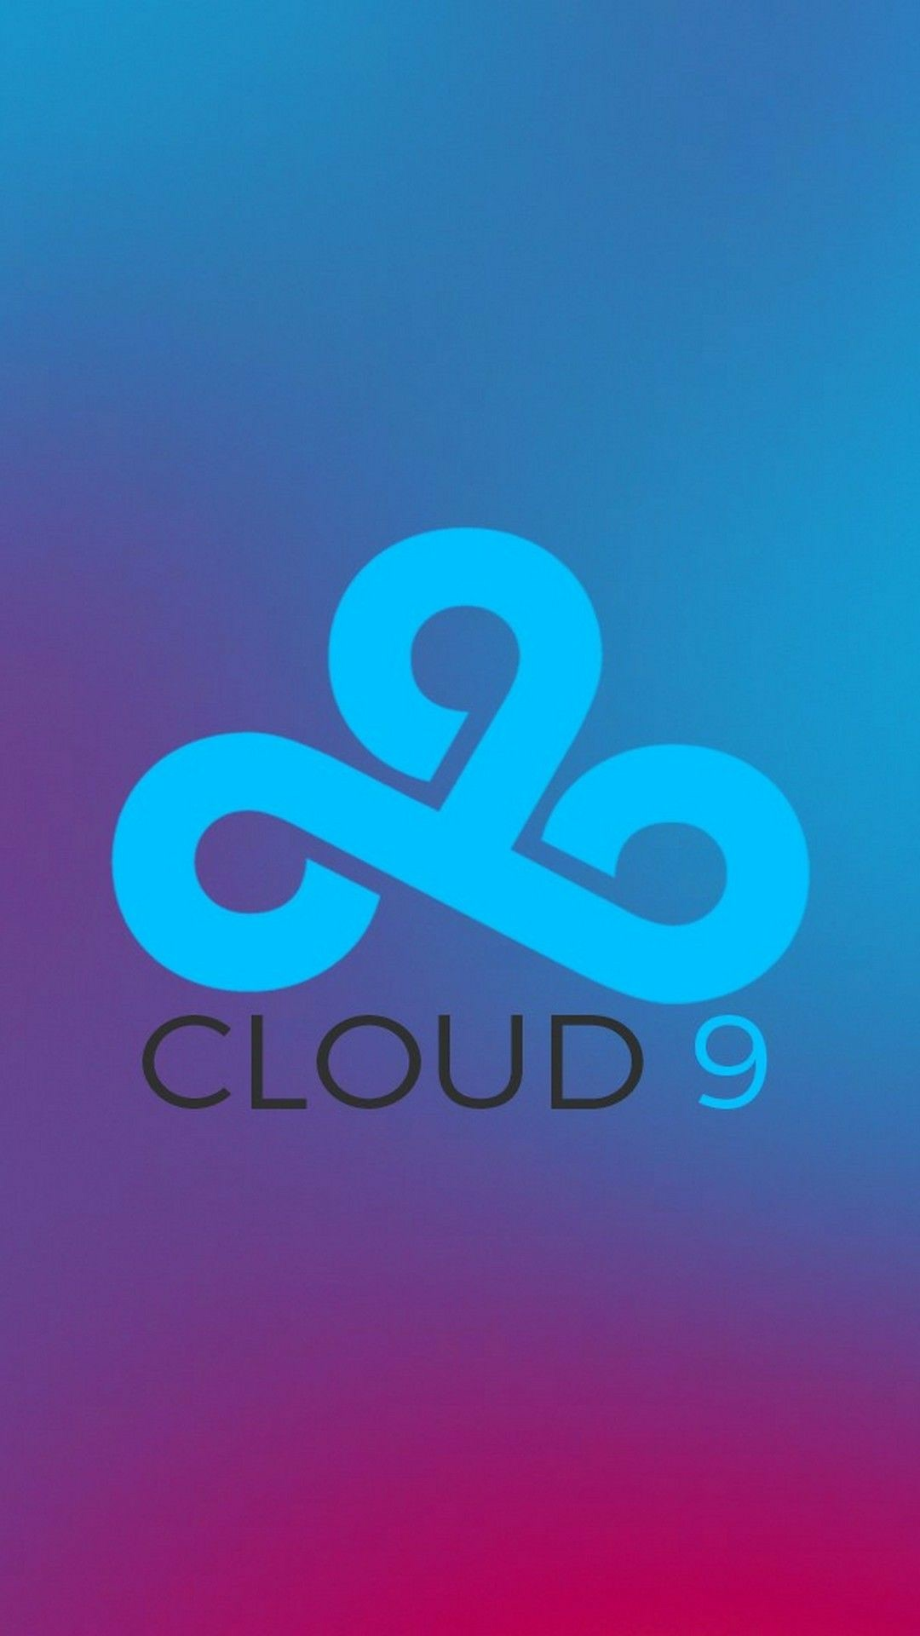 cloud 9 logo iphone